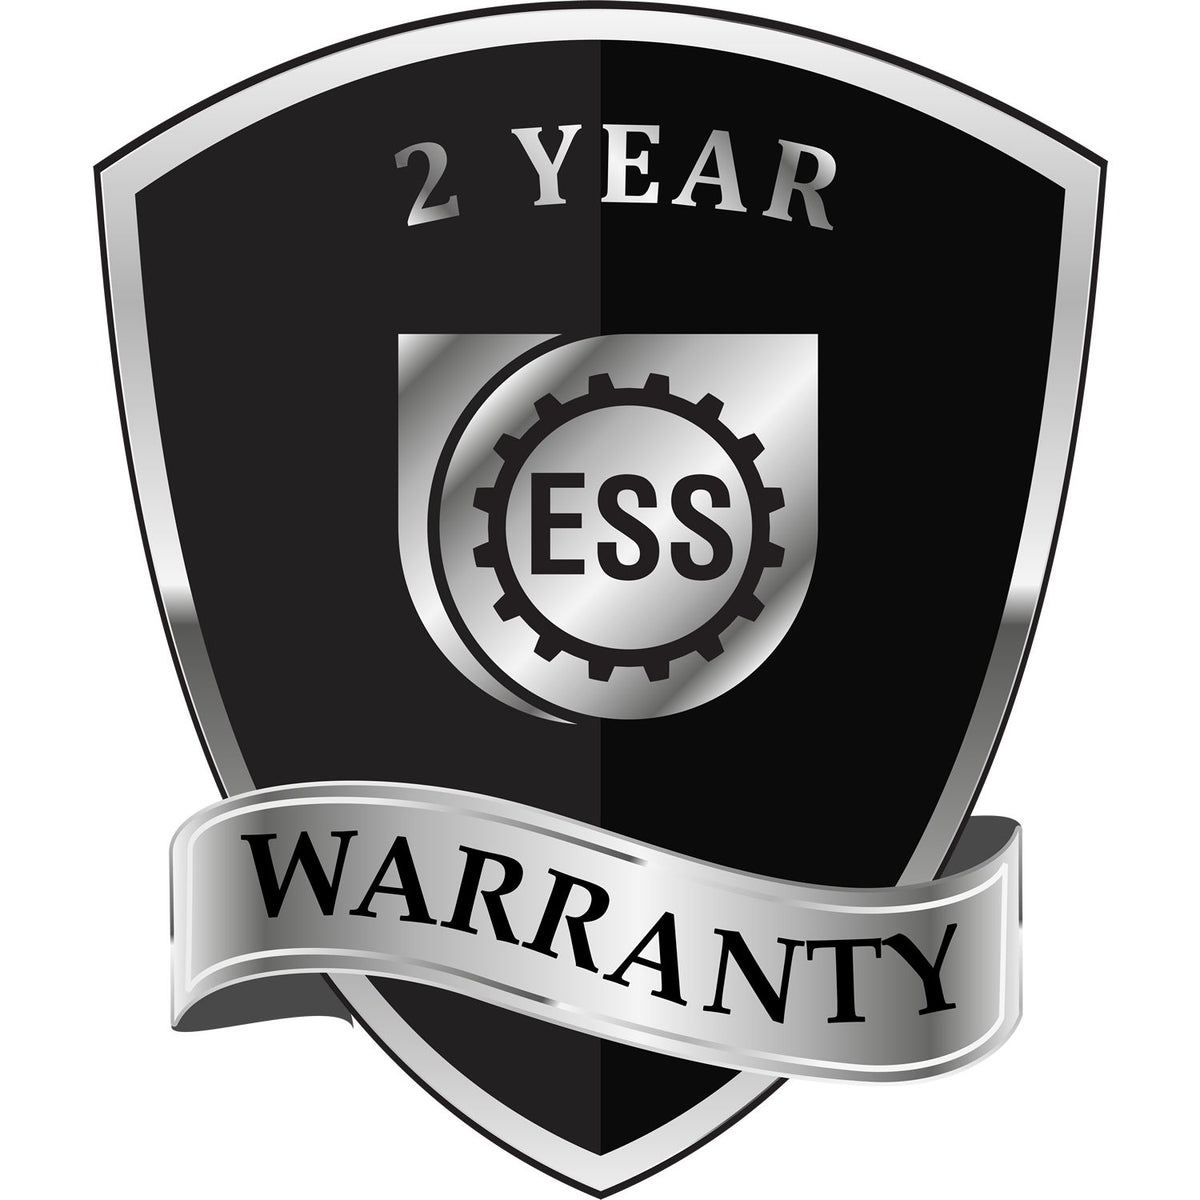 A black and silver badge or emblem showing warranty information for the Maryland Geologist Desk Seal